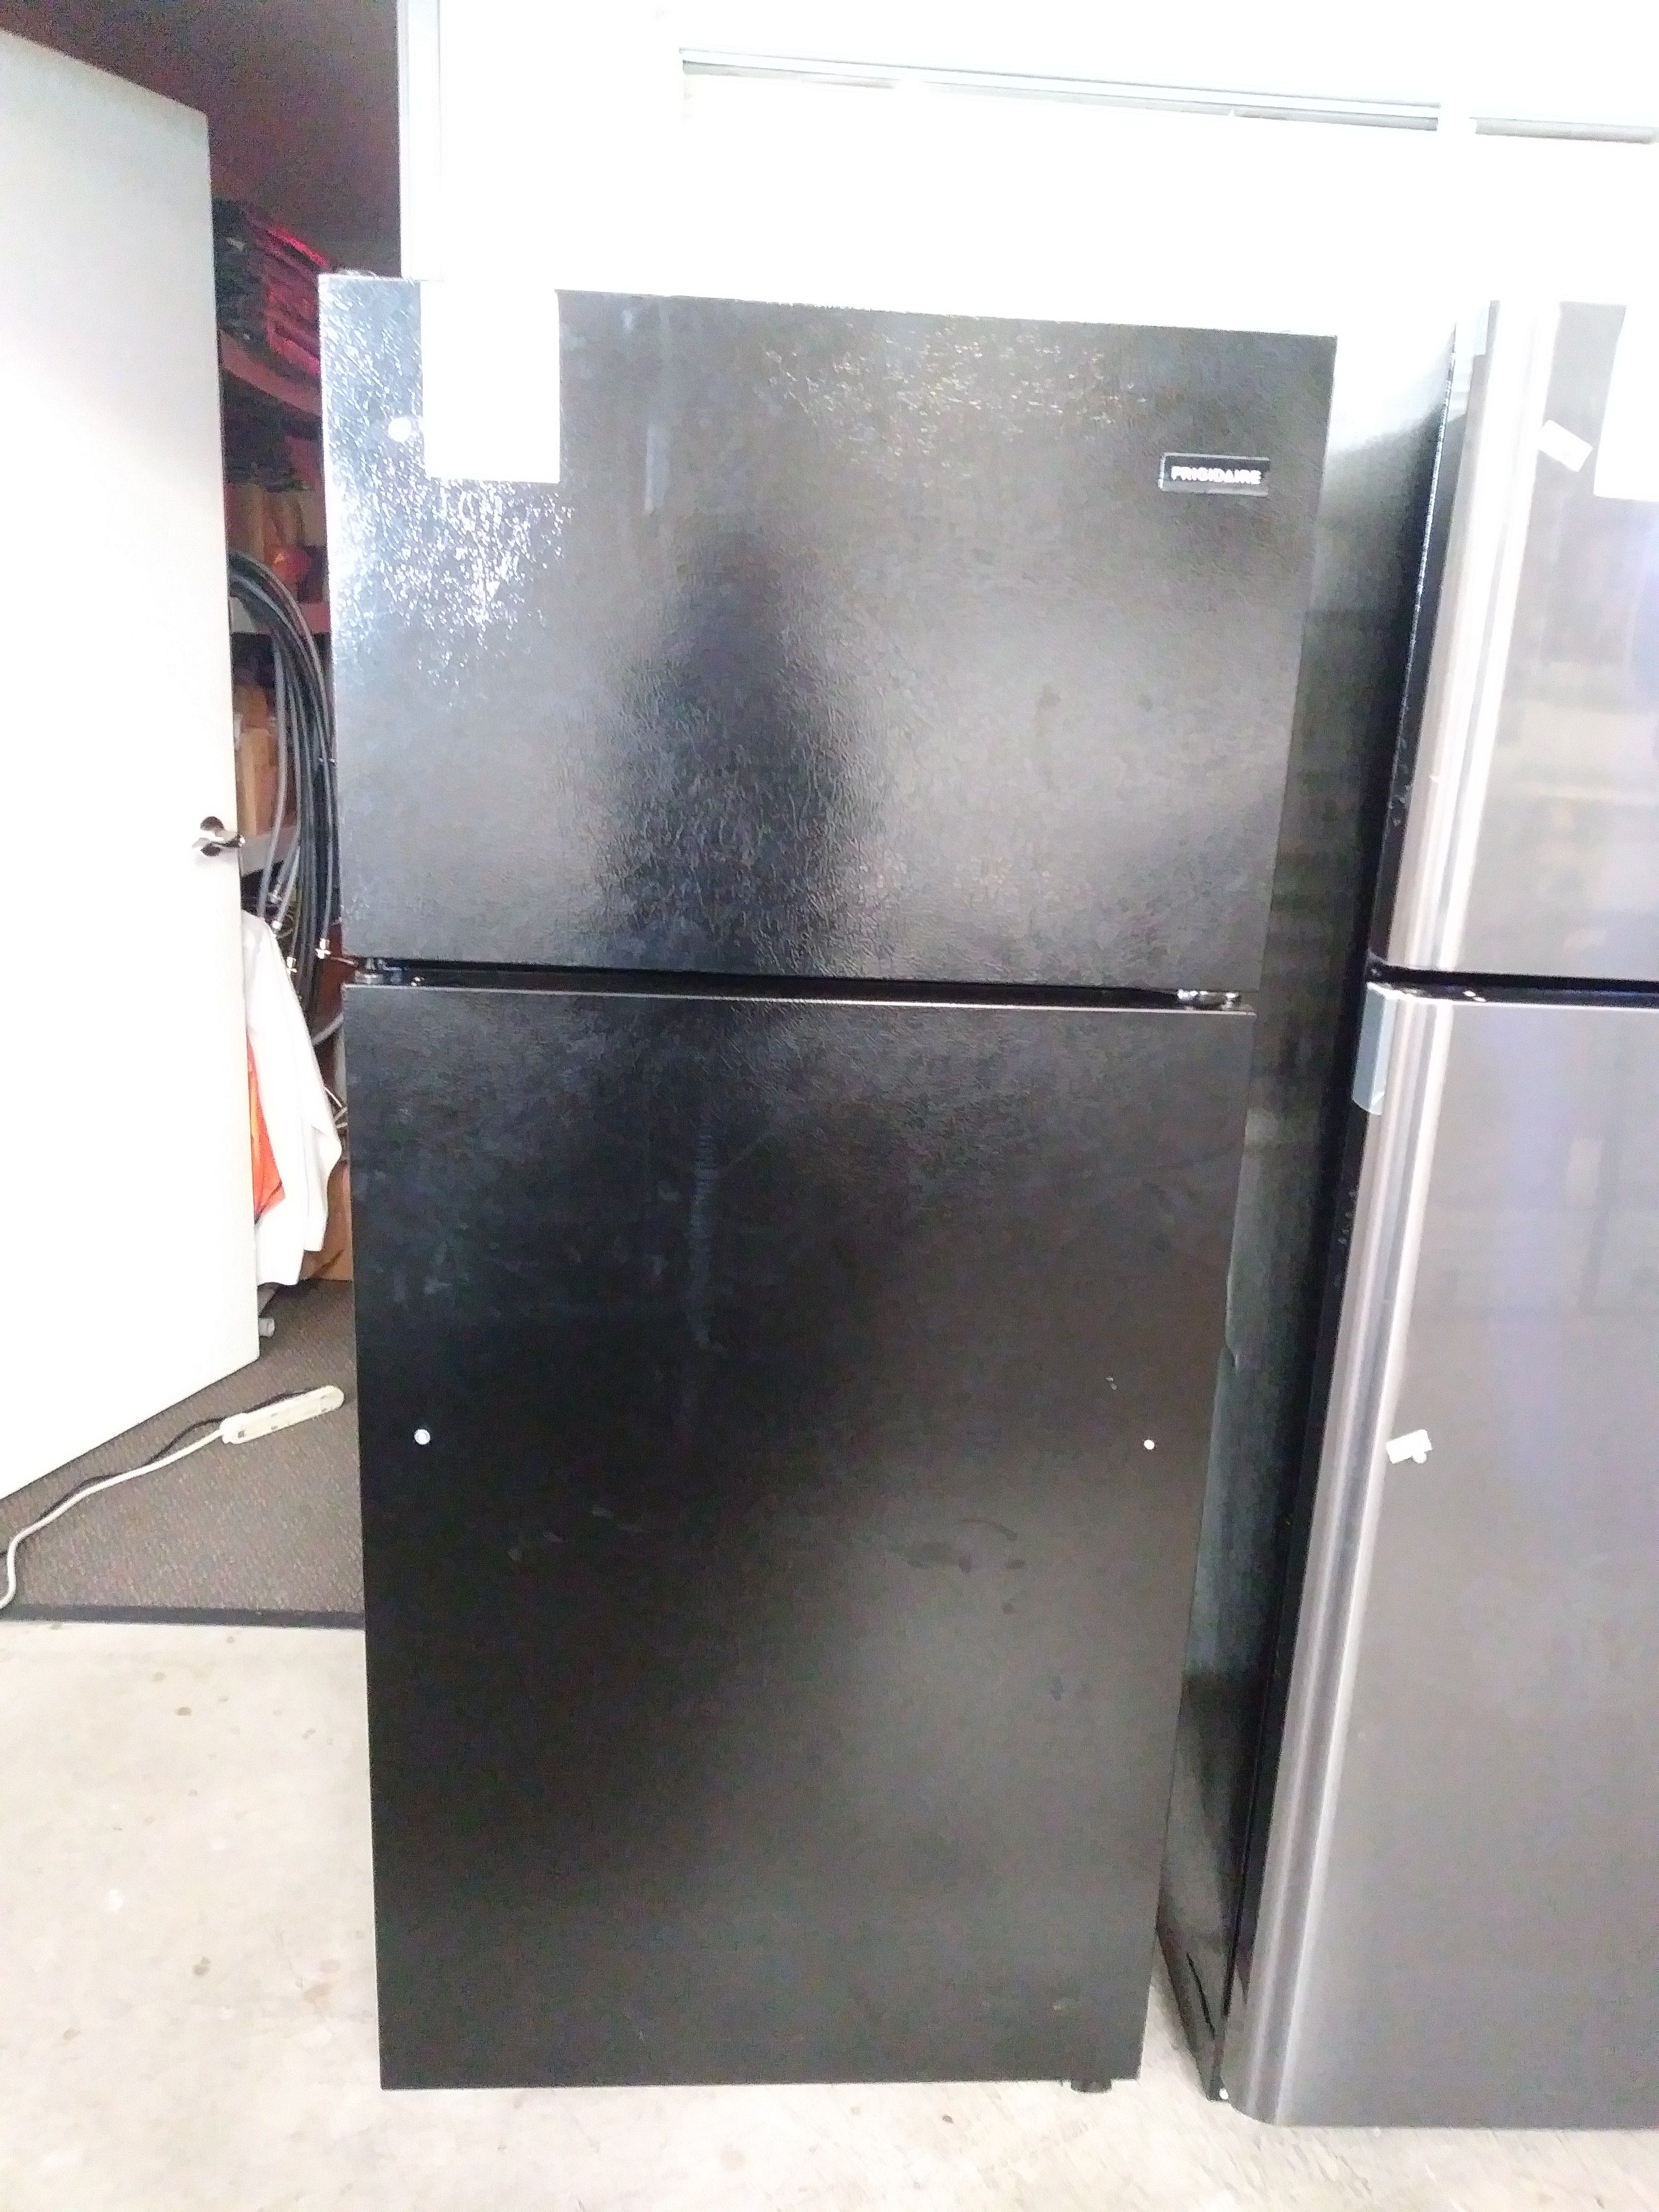 New Frigidaire in black refrigerator